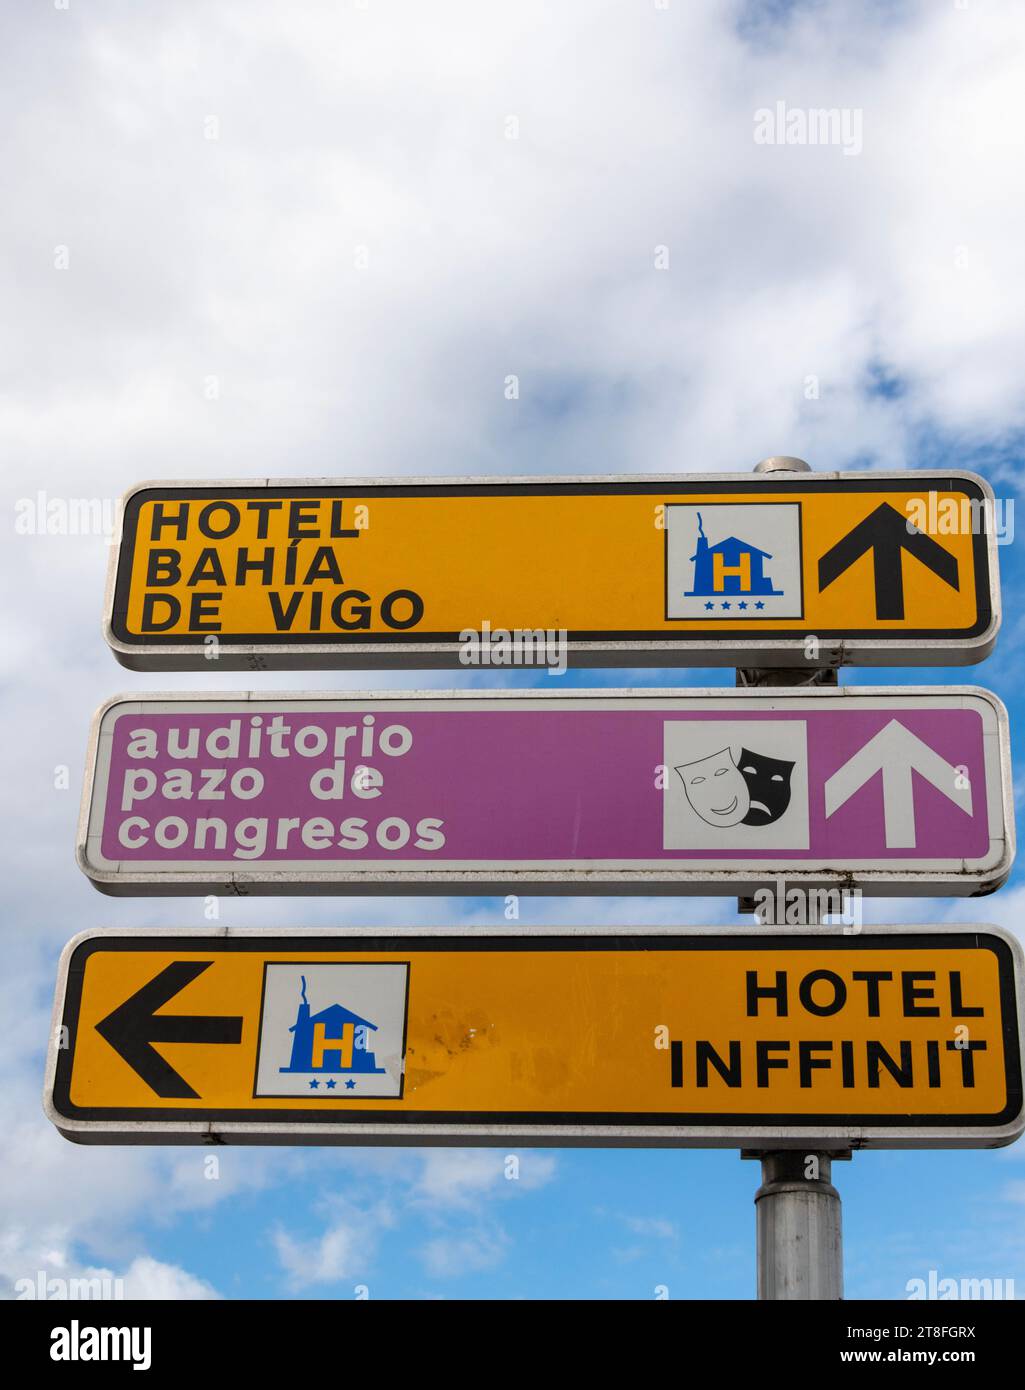 Vigo Spain,  direction signs for Hotel Bahia de Vigo, Hotel Inffinit and pink sign for auditorio plaza de congresos Stock Photo